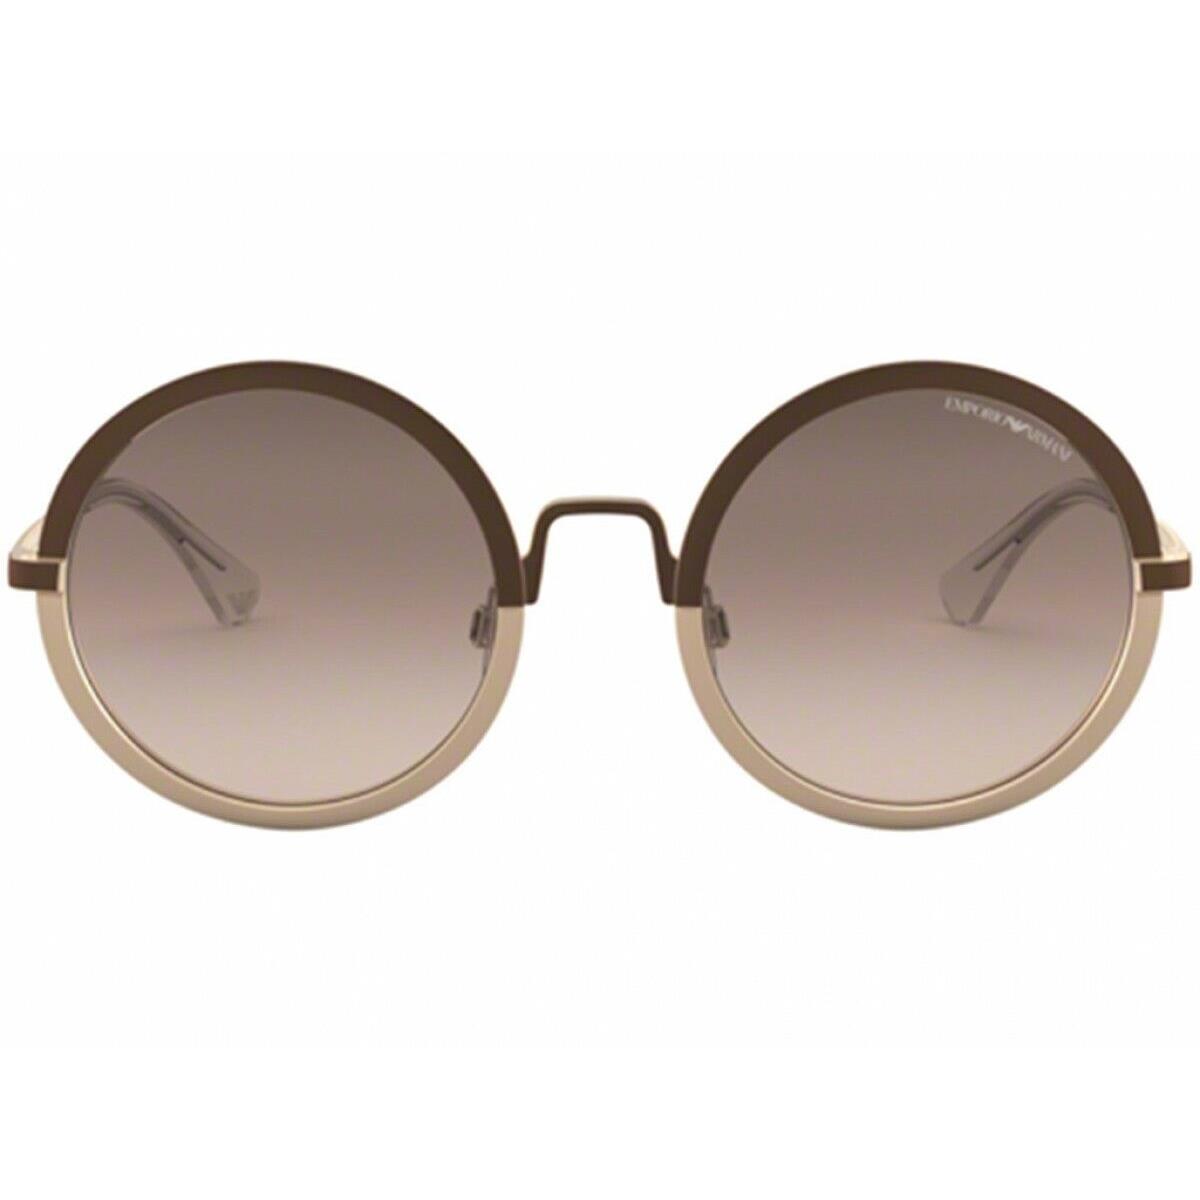 Giorgio Armani Sunglasses EA2077 3268/13 Light Bronze Frames Brown Lens50mm ST